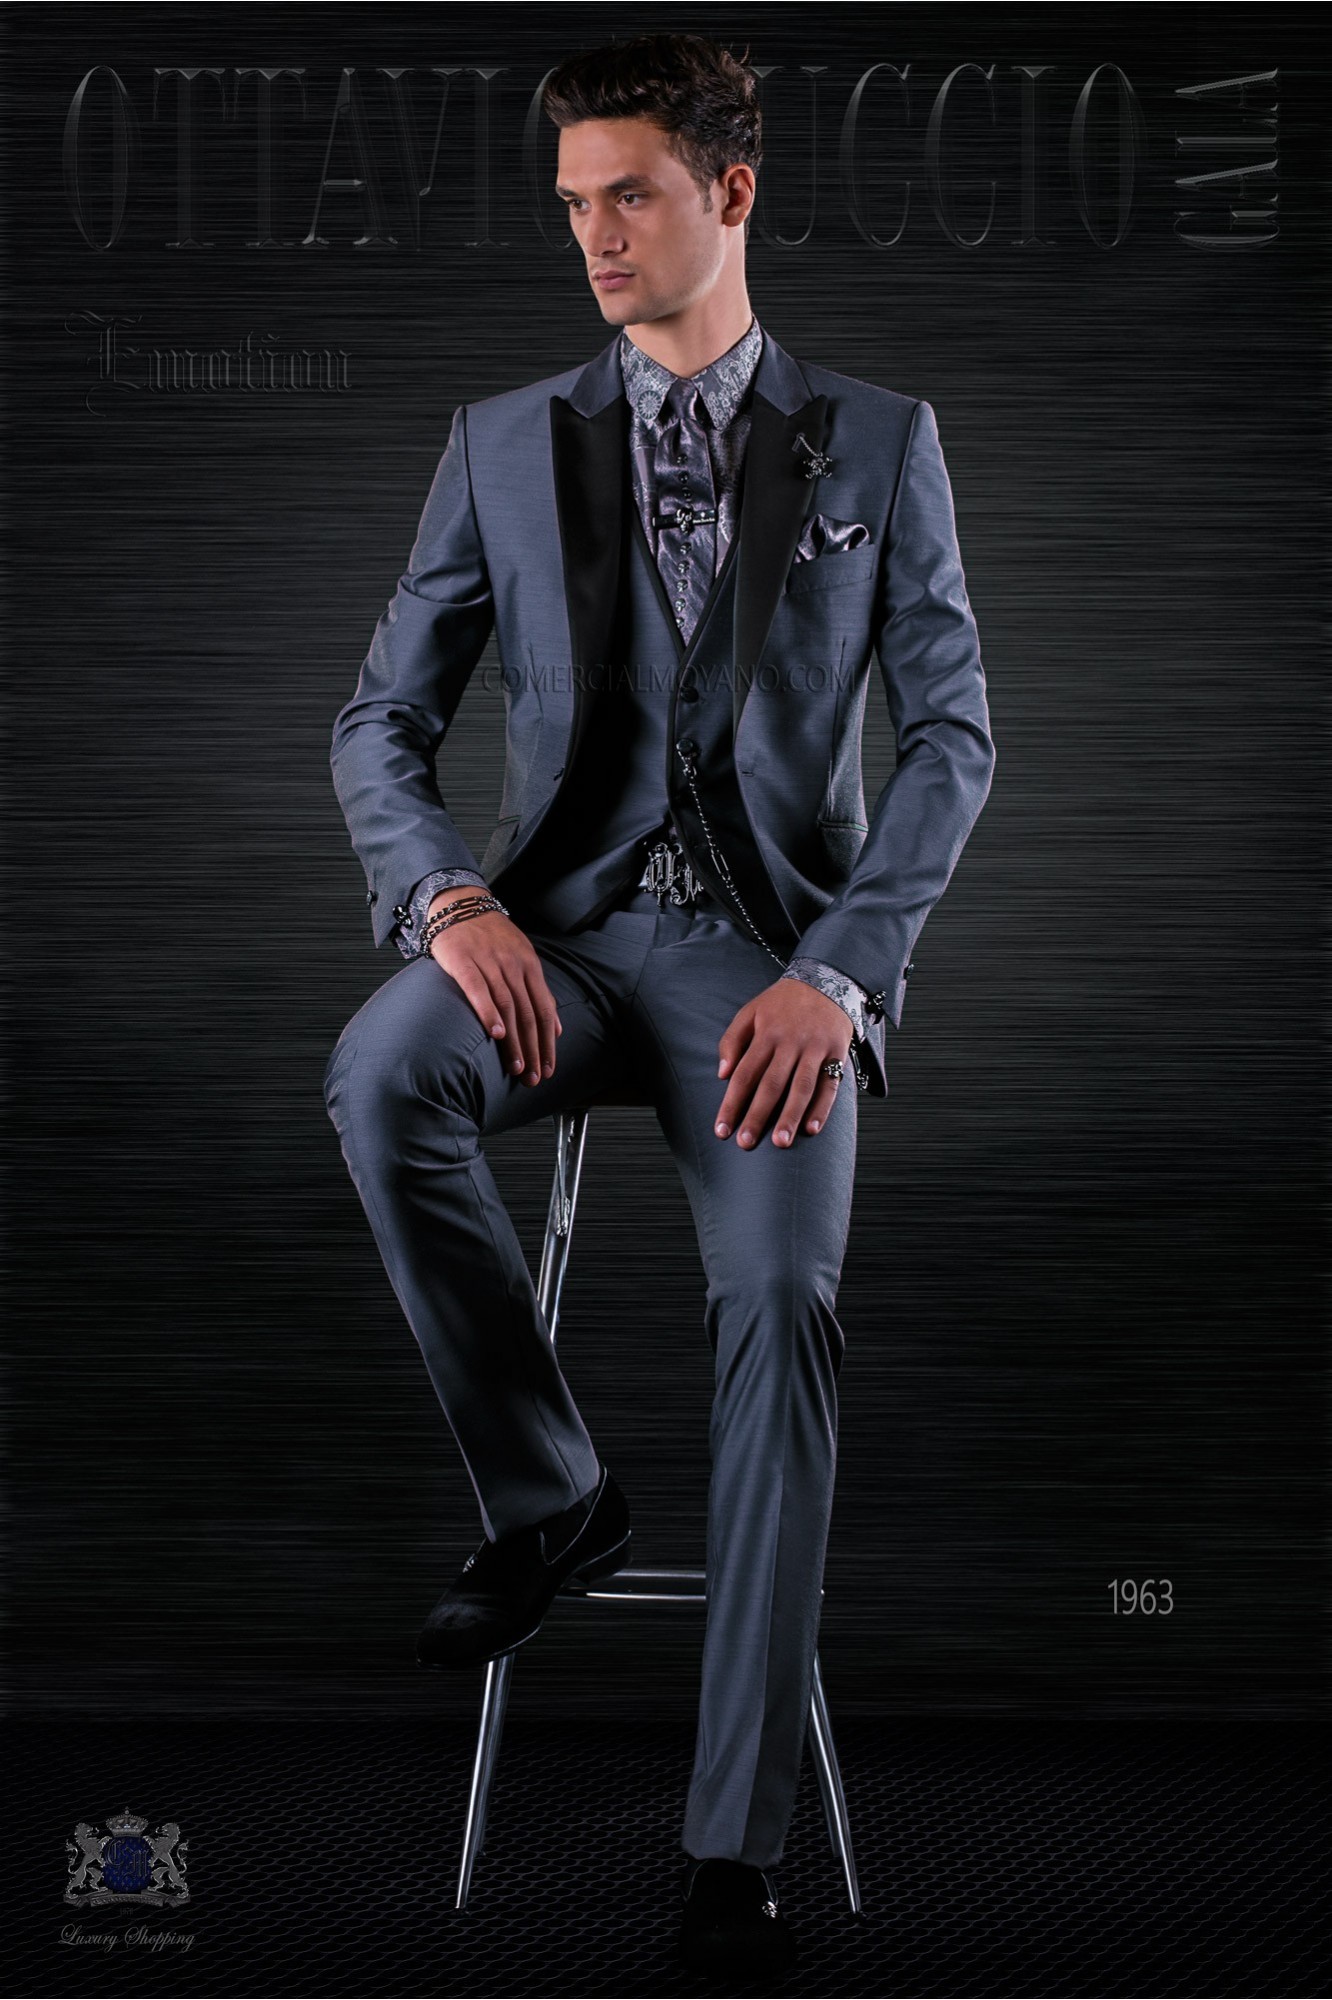 Fashion Italian bespoke anthracite grey suit and waistcoat